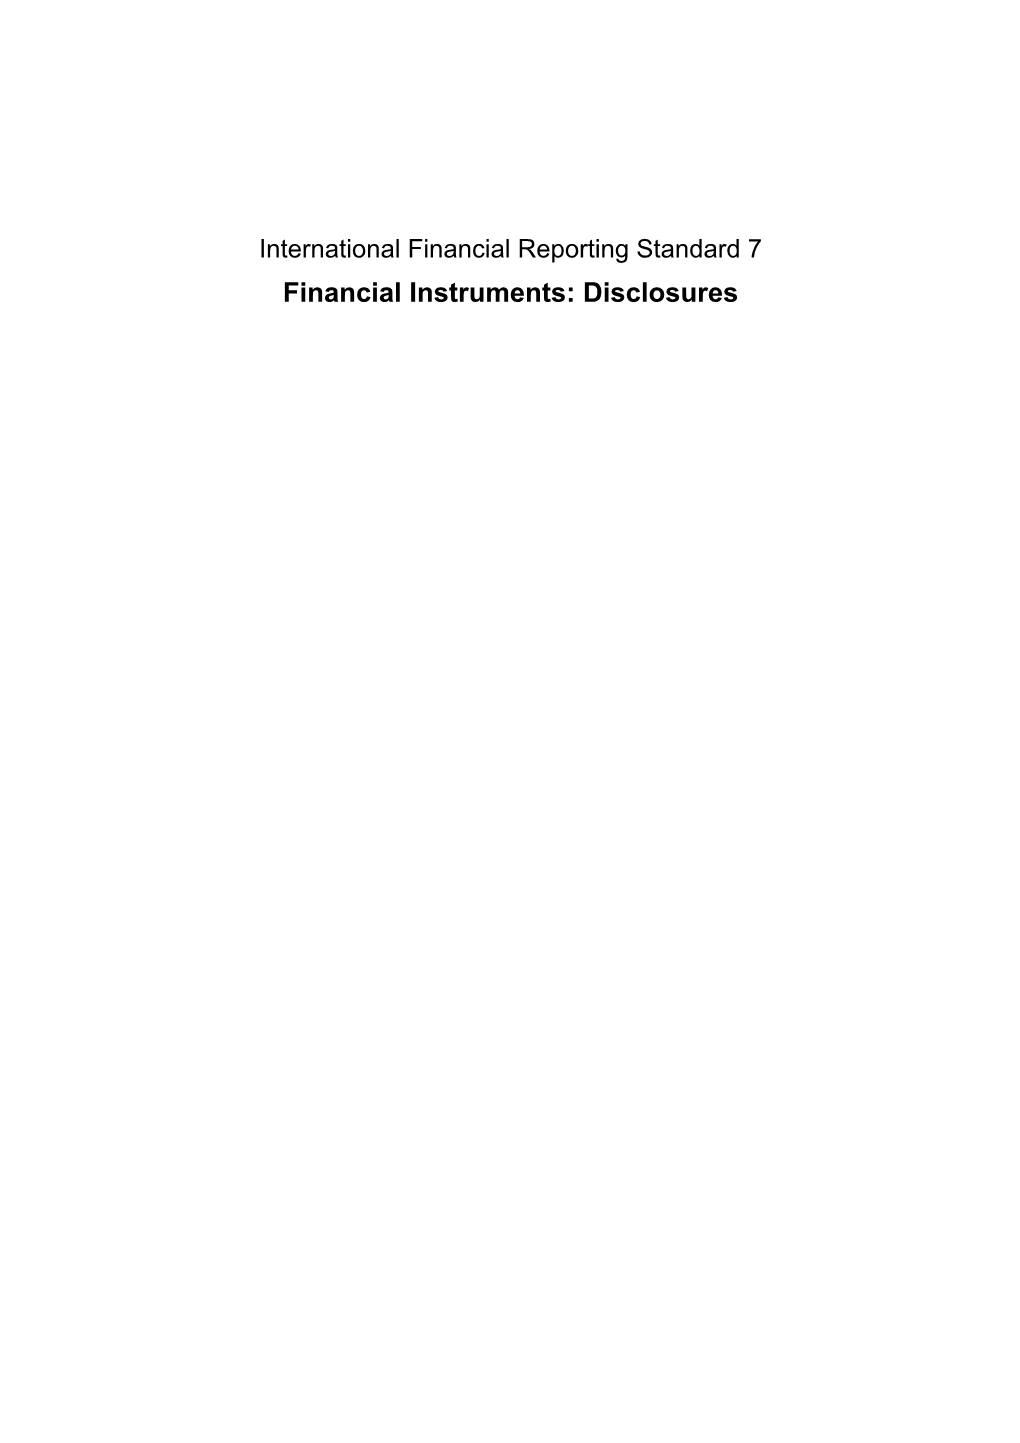 International Financial Reporting Standard 7 Financial Instruments: Disclosures